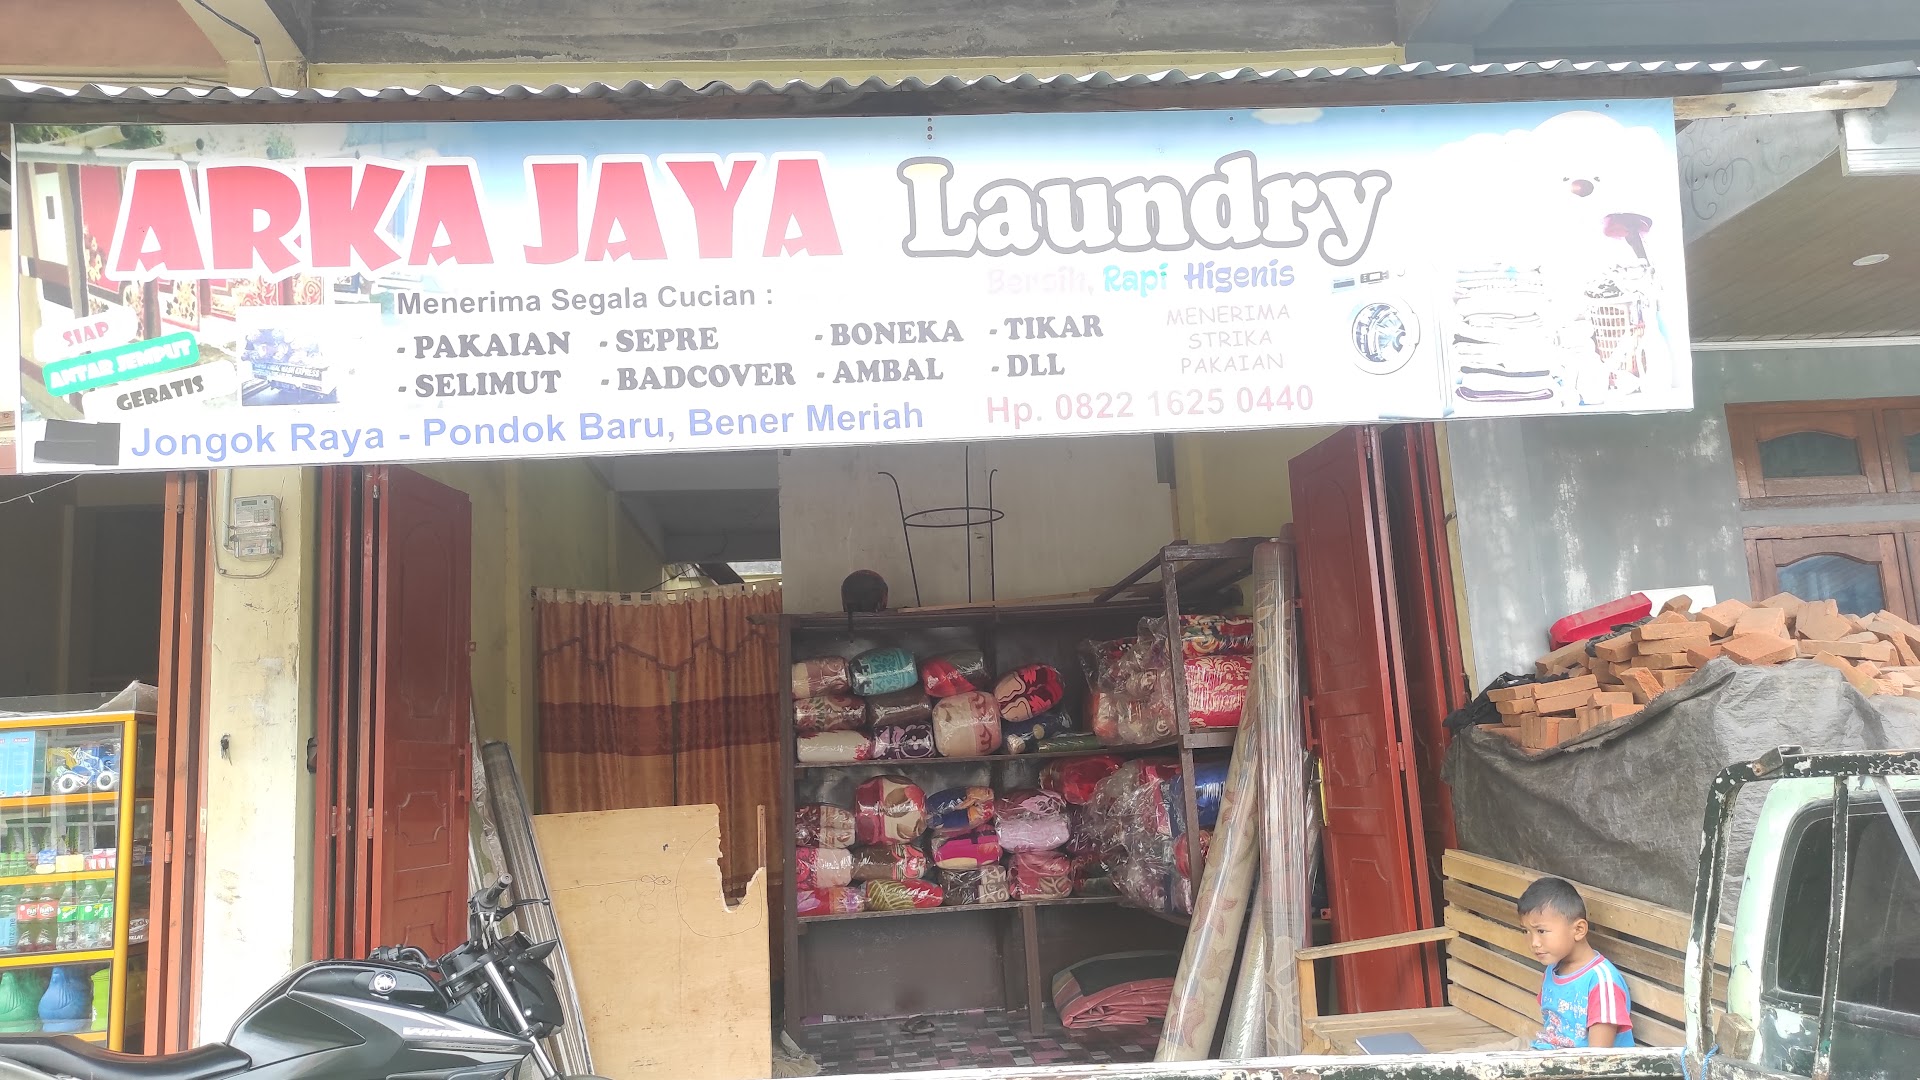 Gambar Arka Jaya Laundry